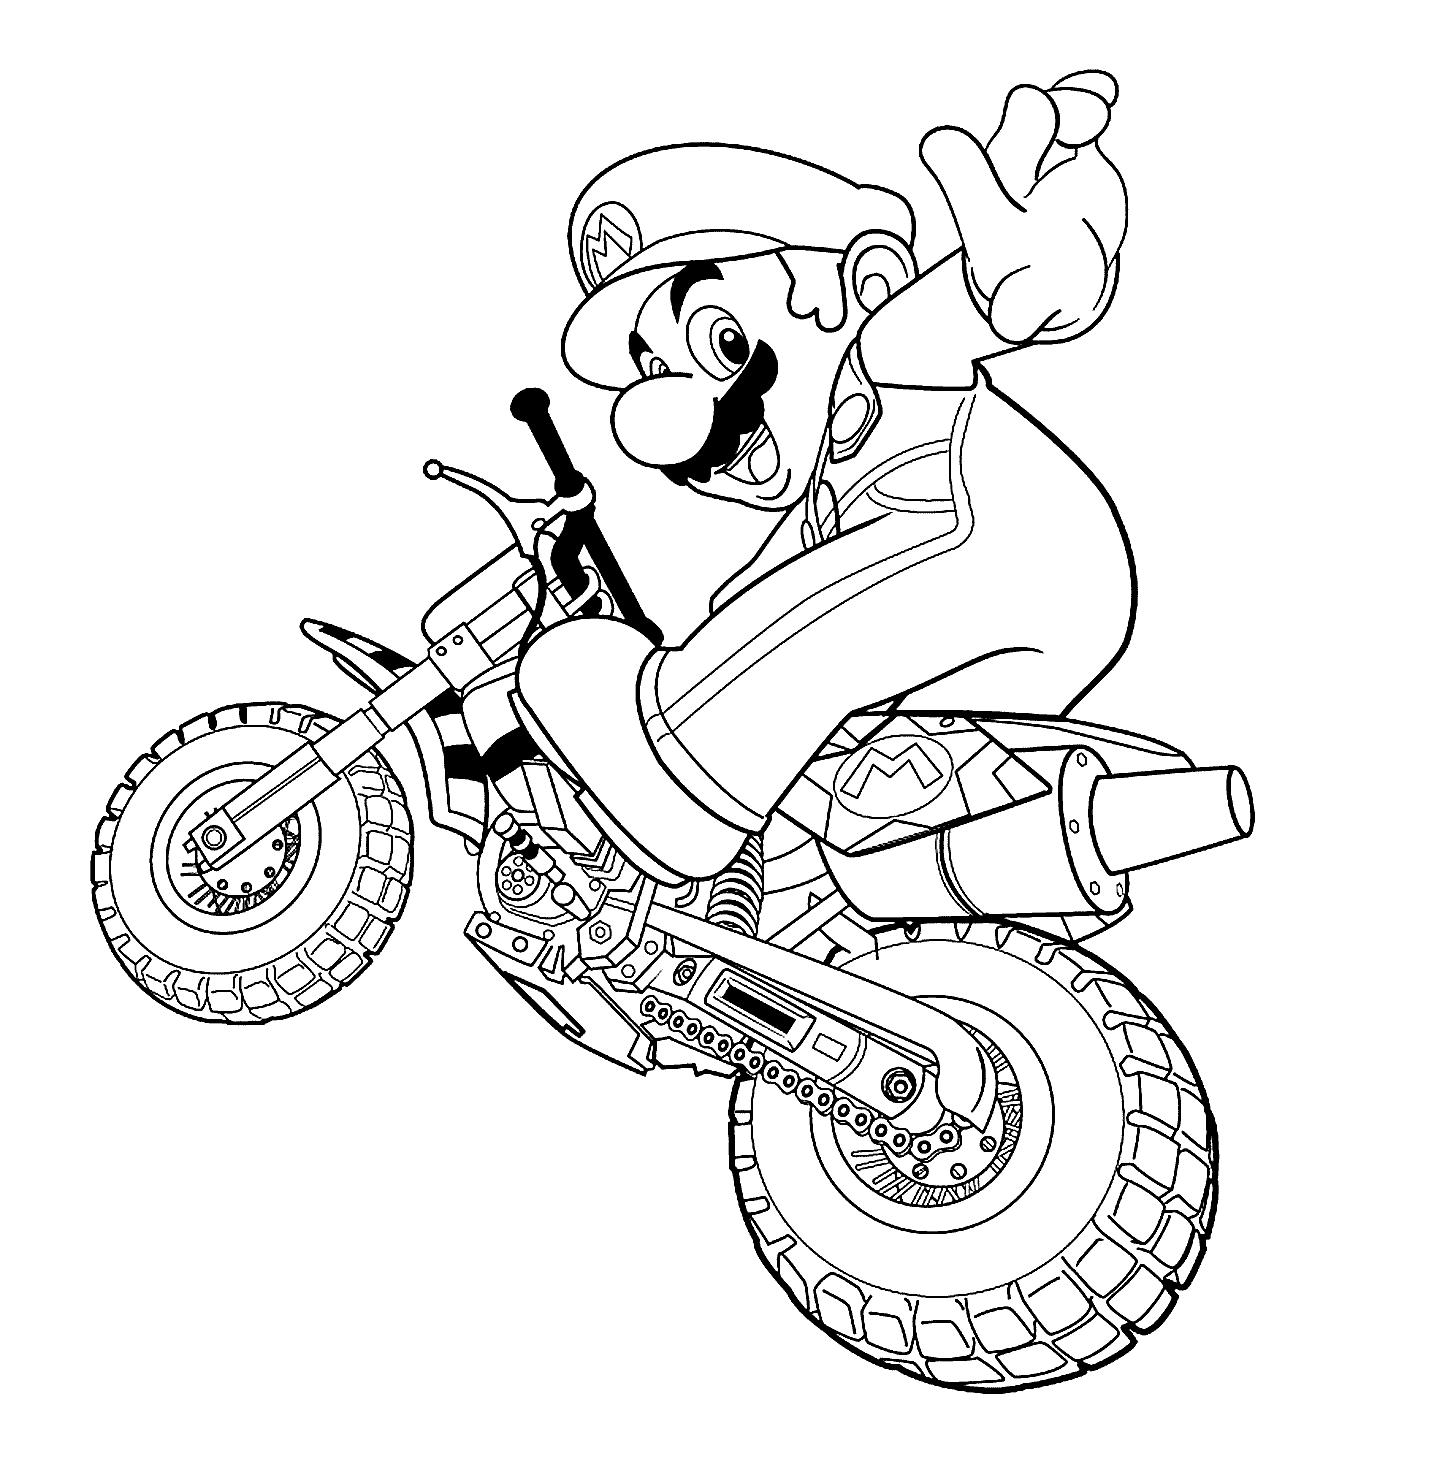 Mario The Motor Driver